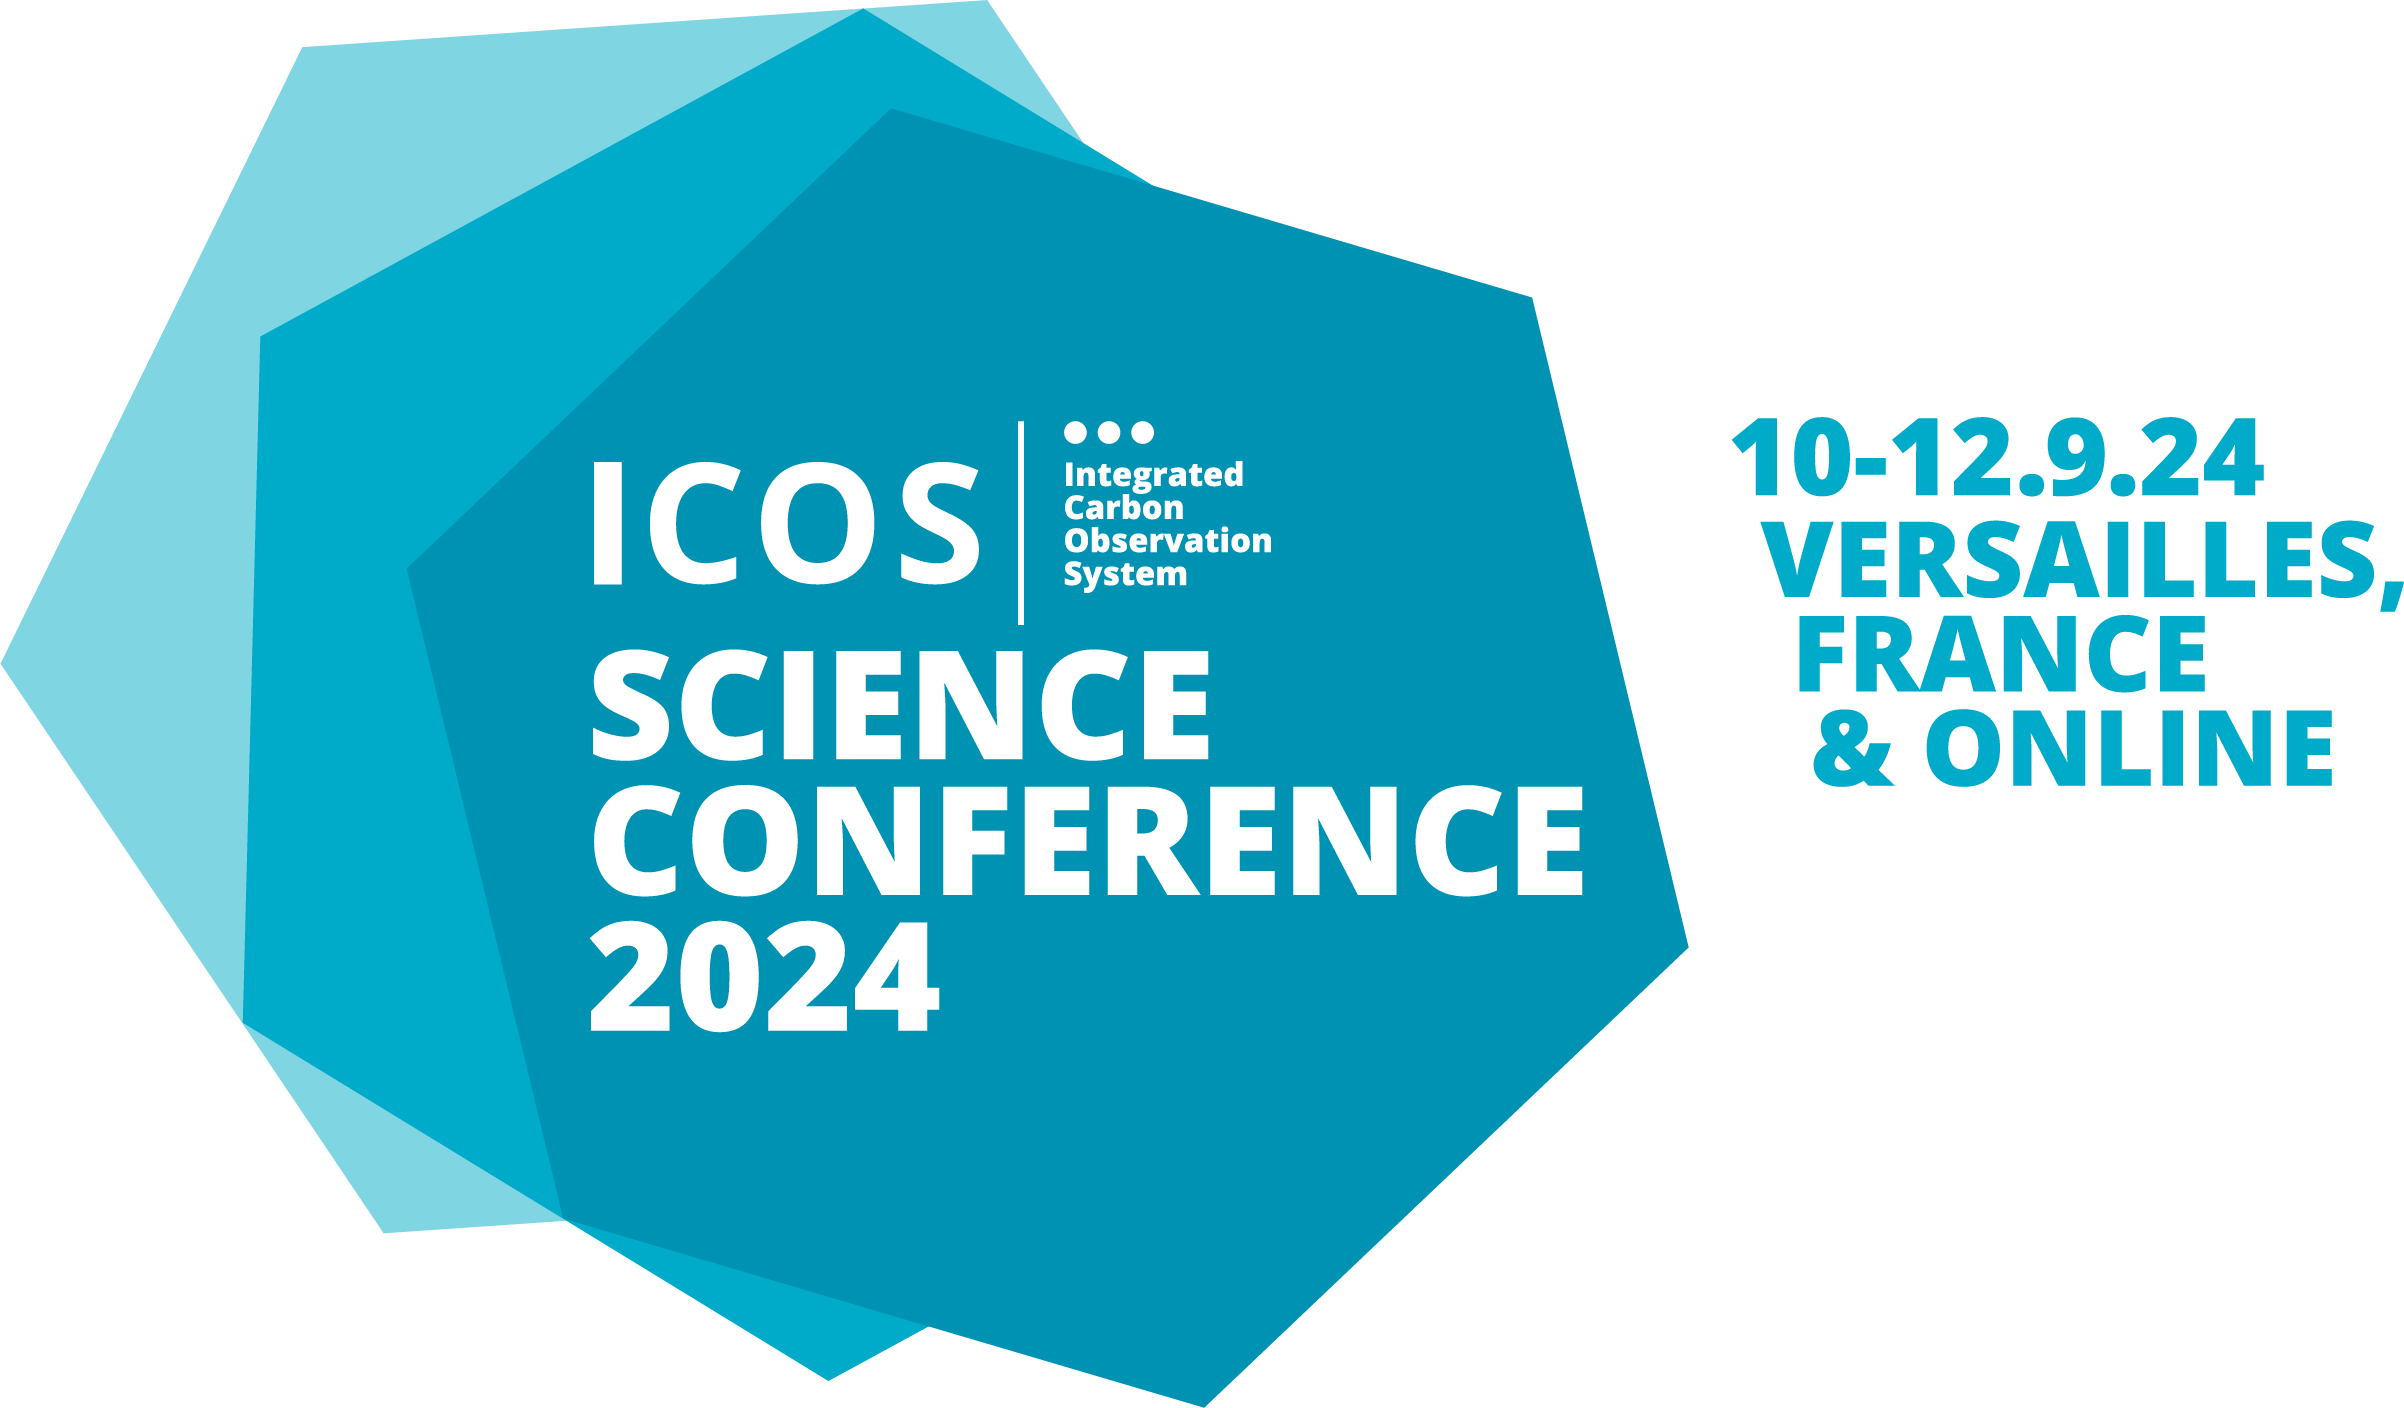 ICOS Science Conference 2024 logo